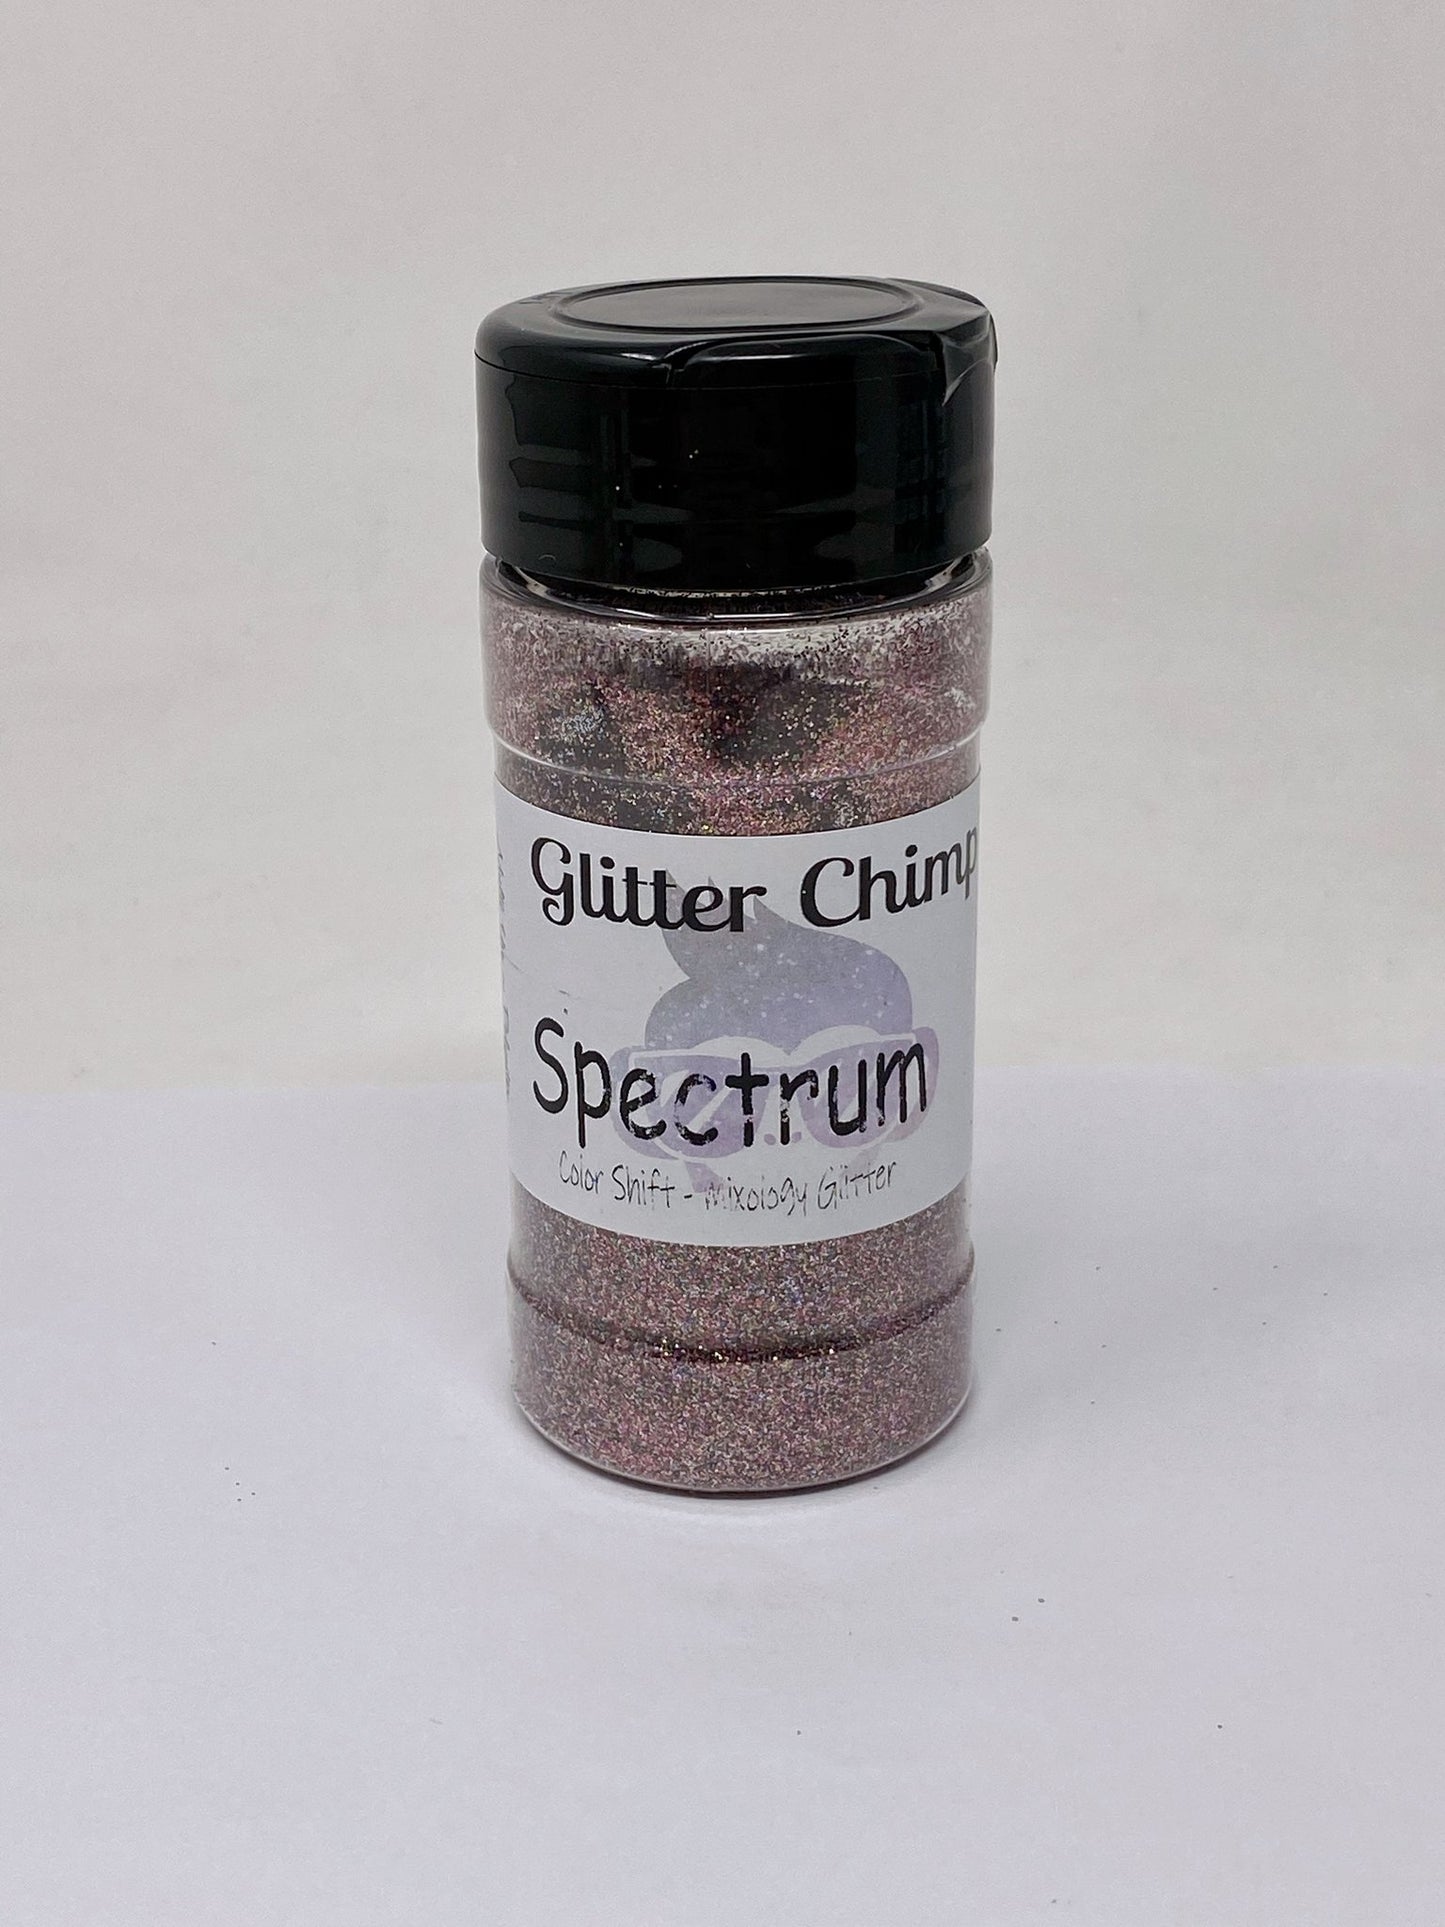 Spectrum Color Shift Mixology Glitter